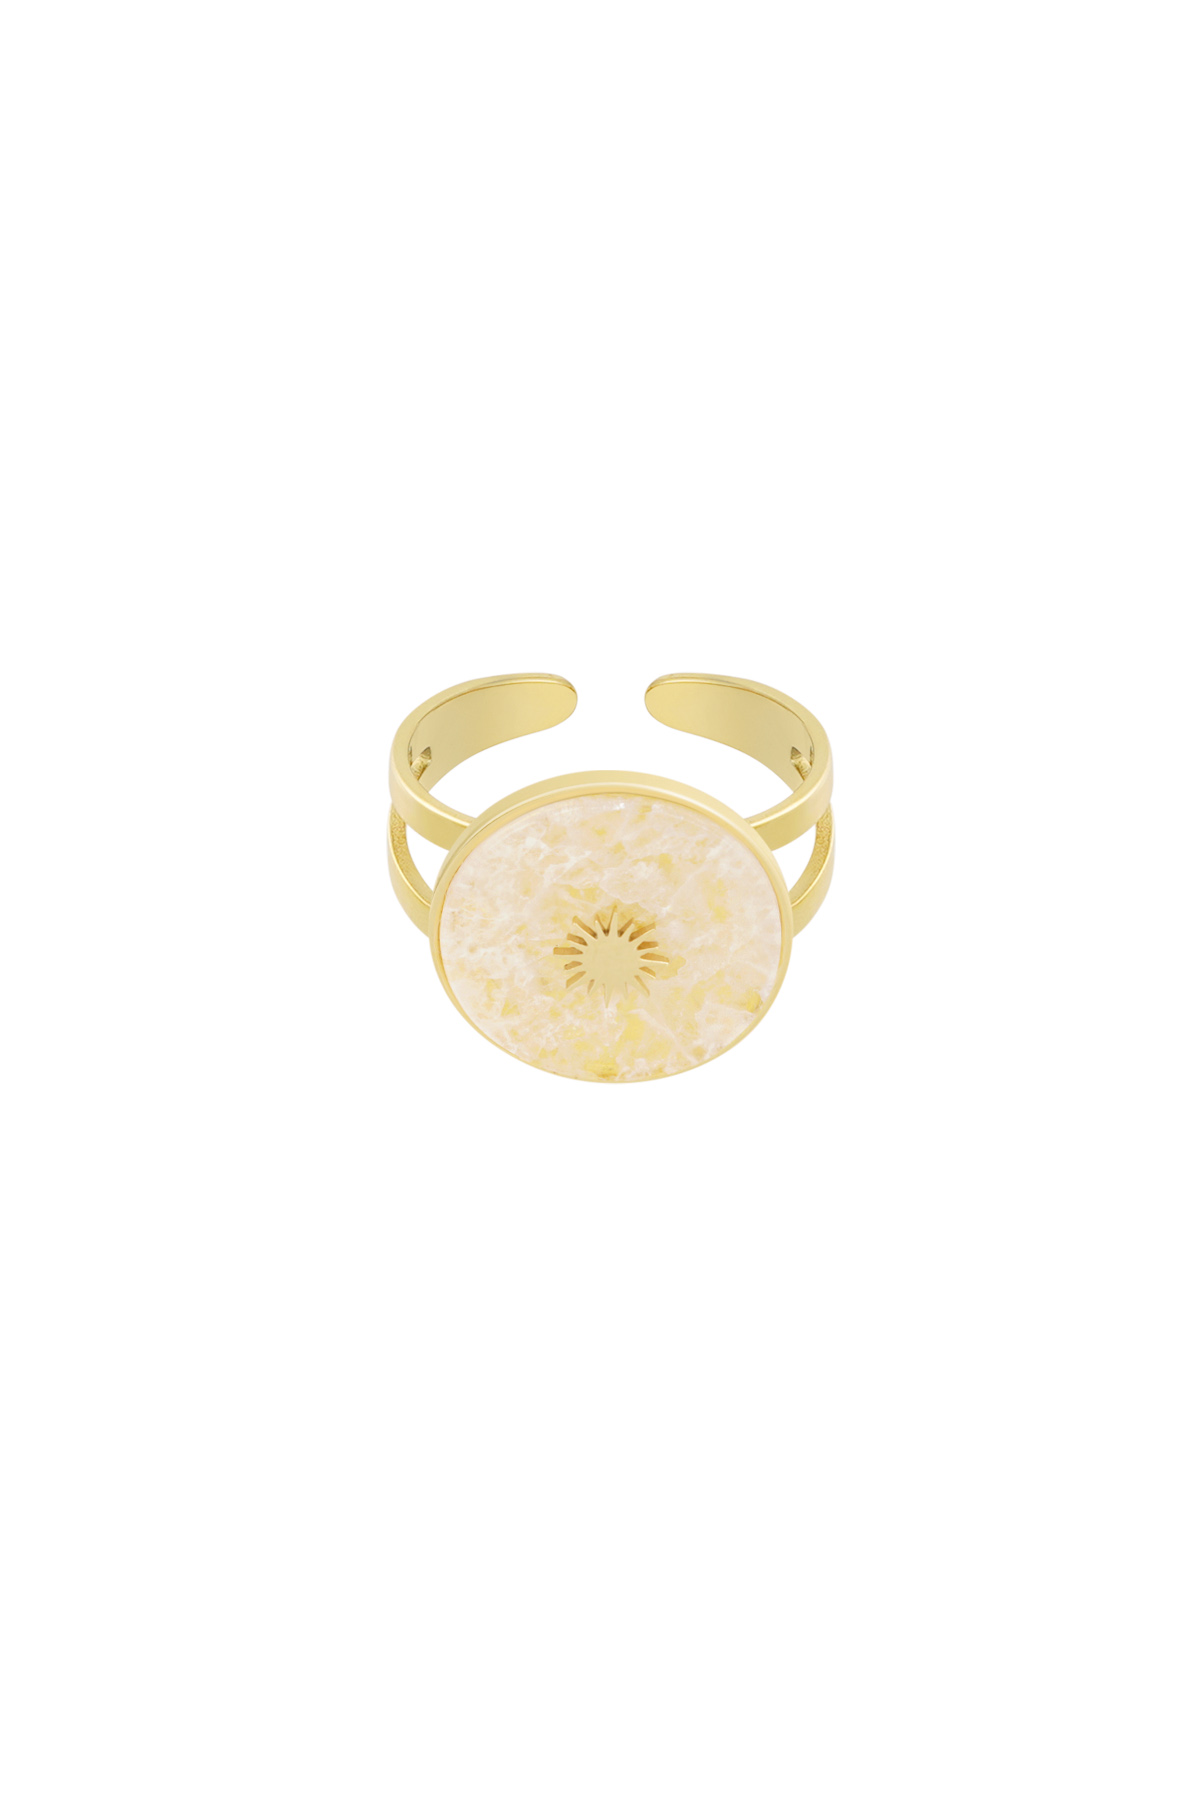 Ring ronde steen met ster - goud/off-white h5 